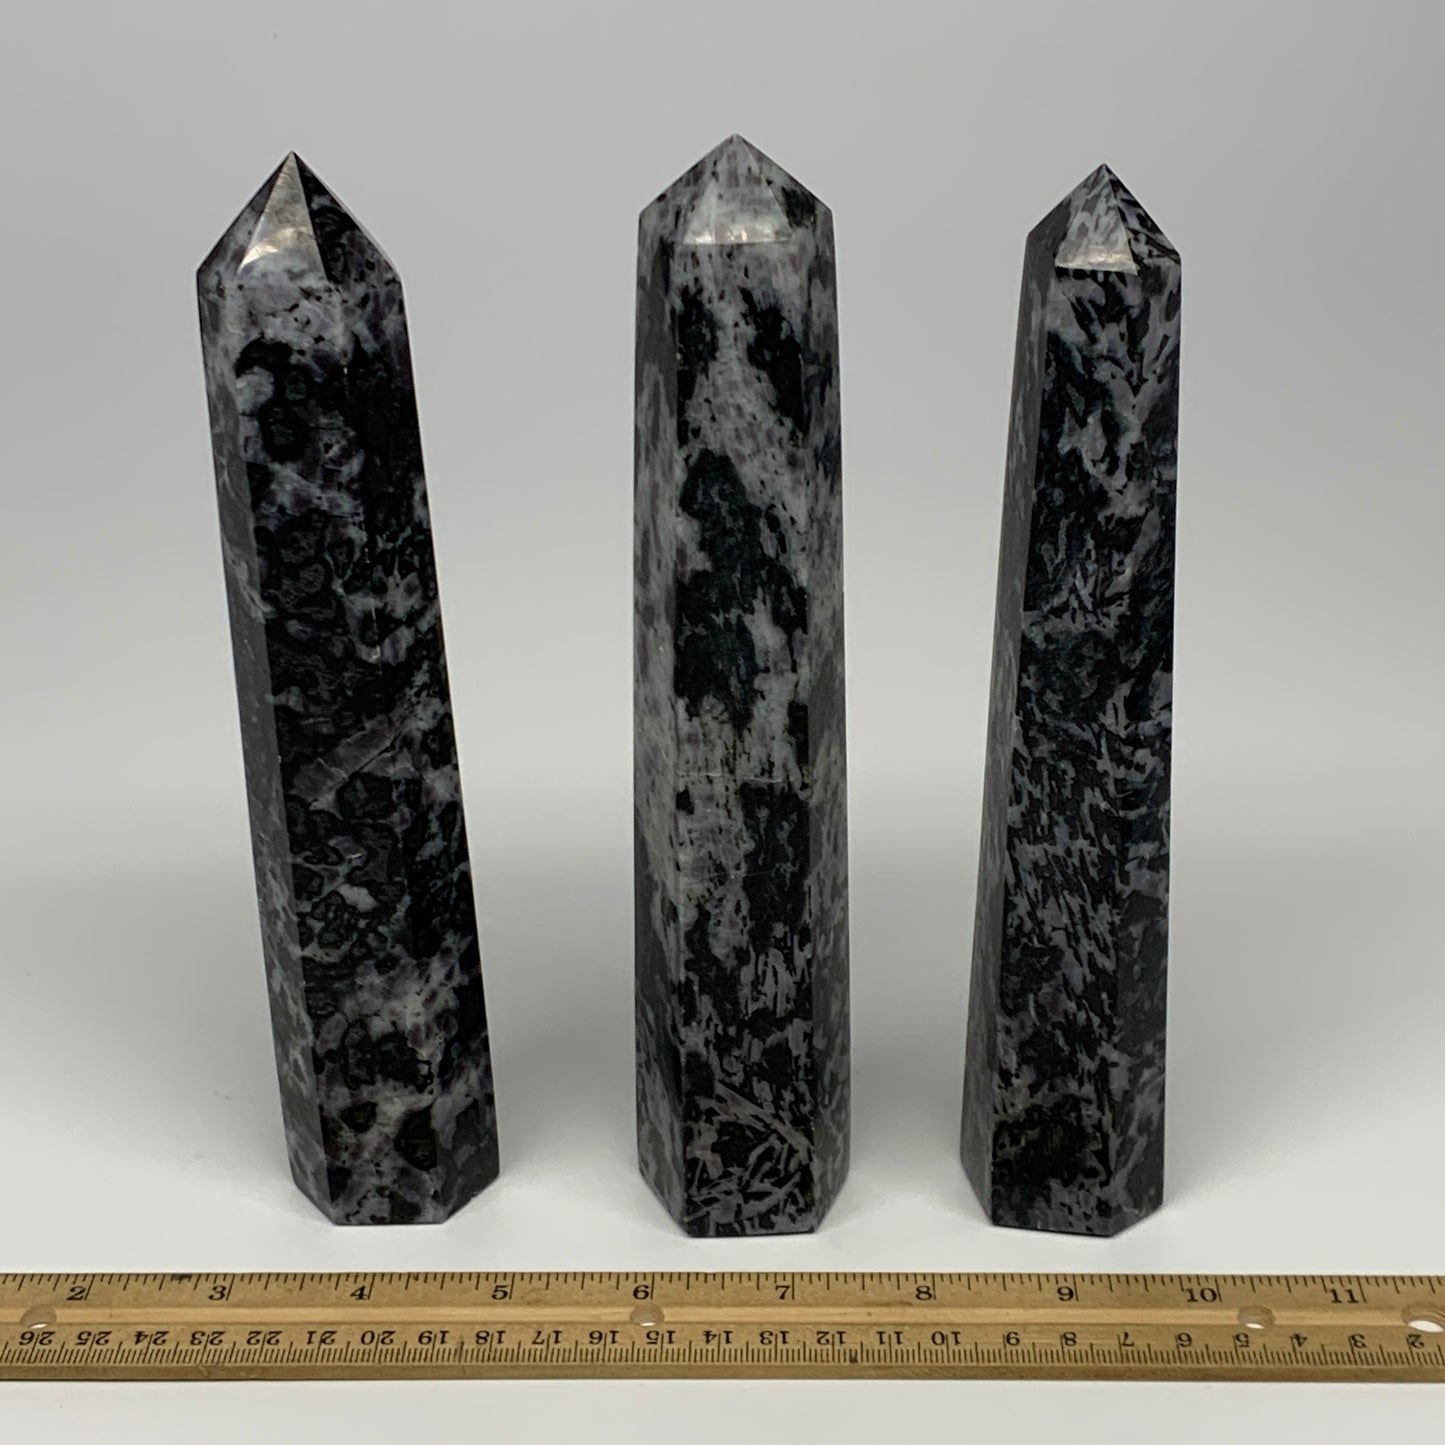 1355 grams, 7.9" - 8", 3 pcs, Indigo Gabro Merlinte Towers/Obelisks, B21444